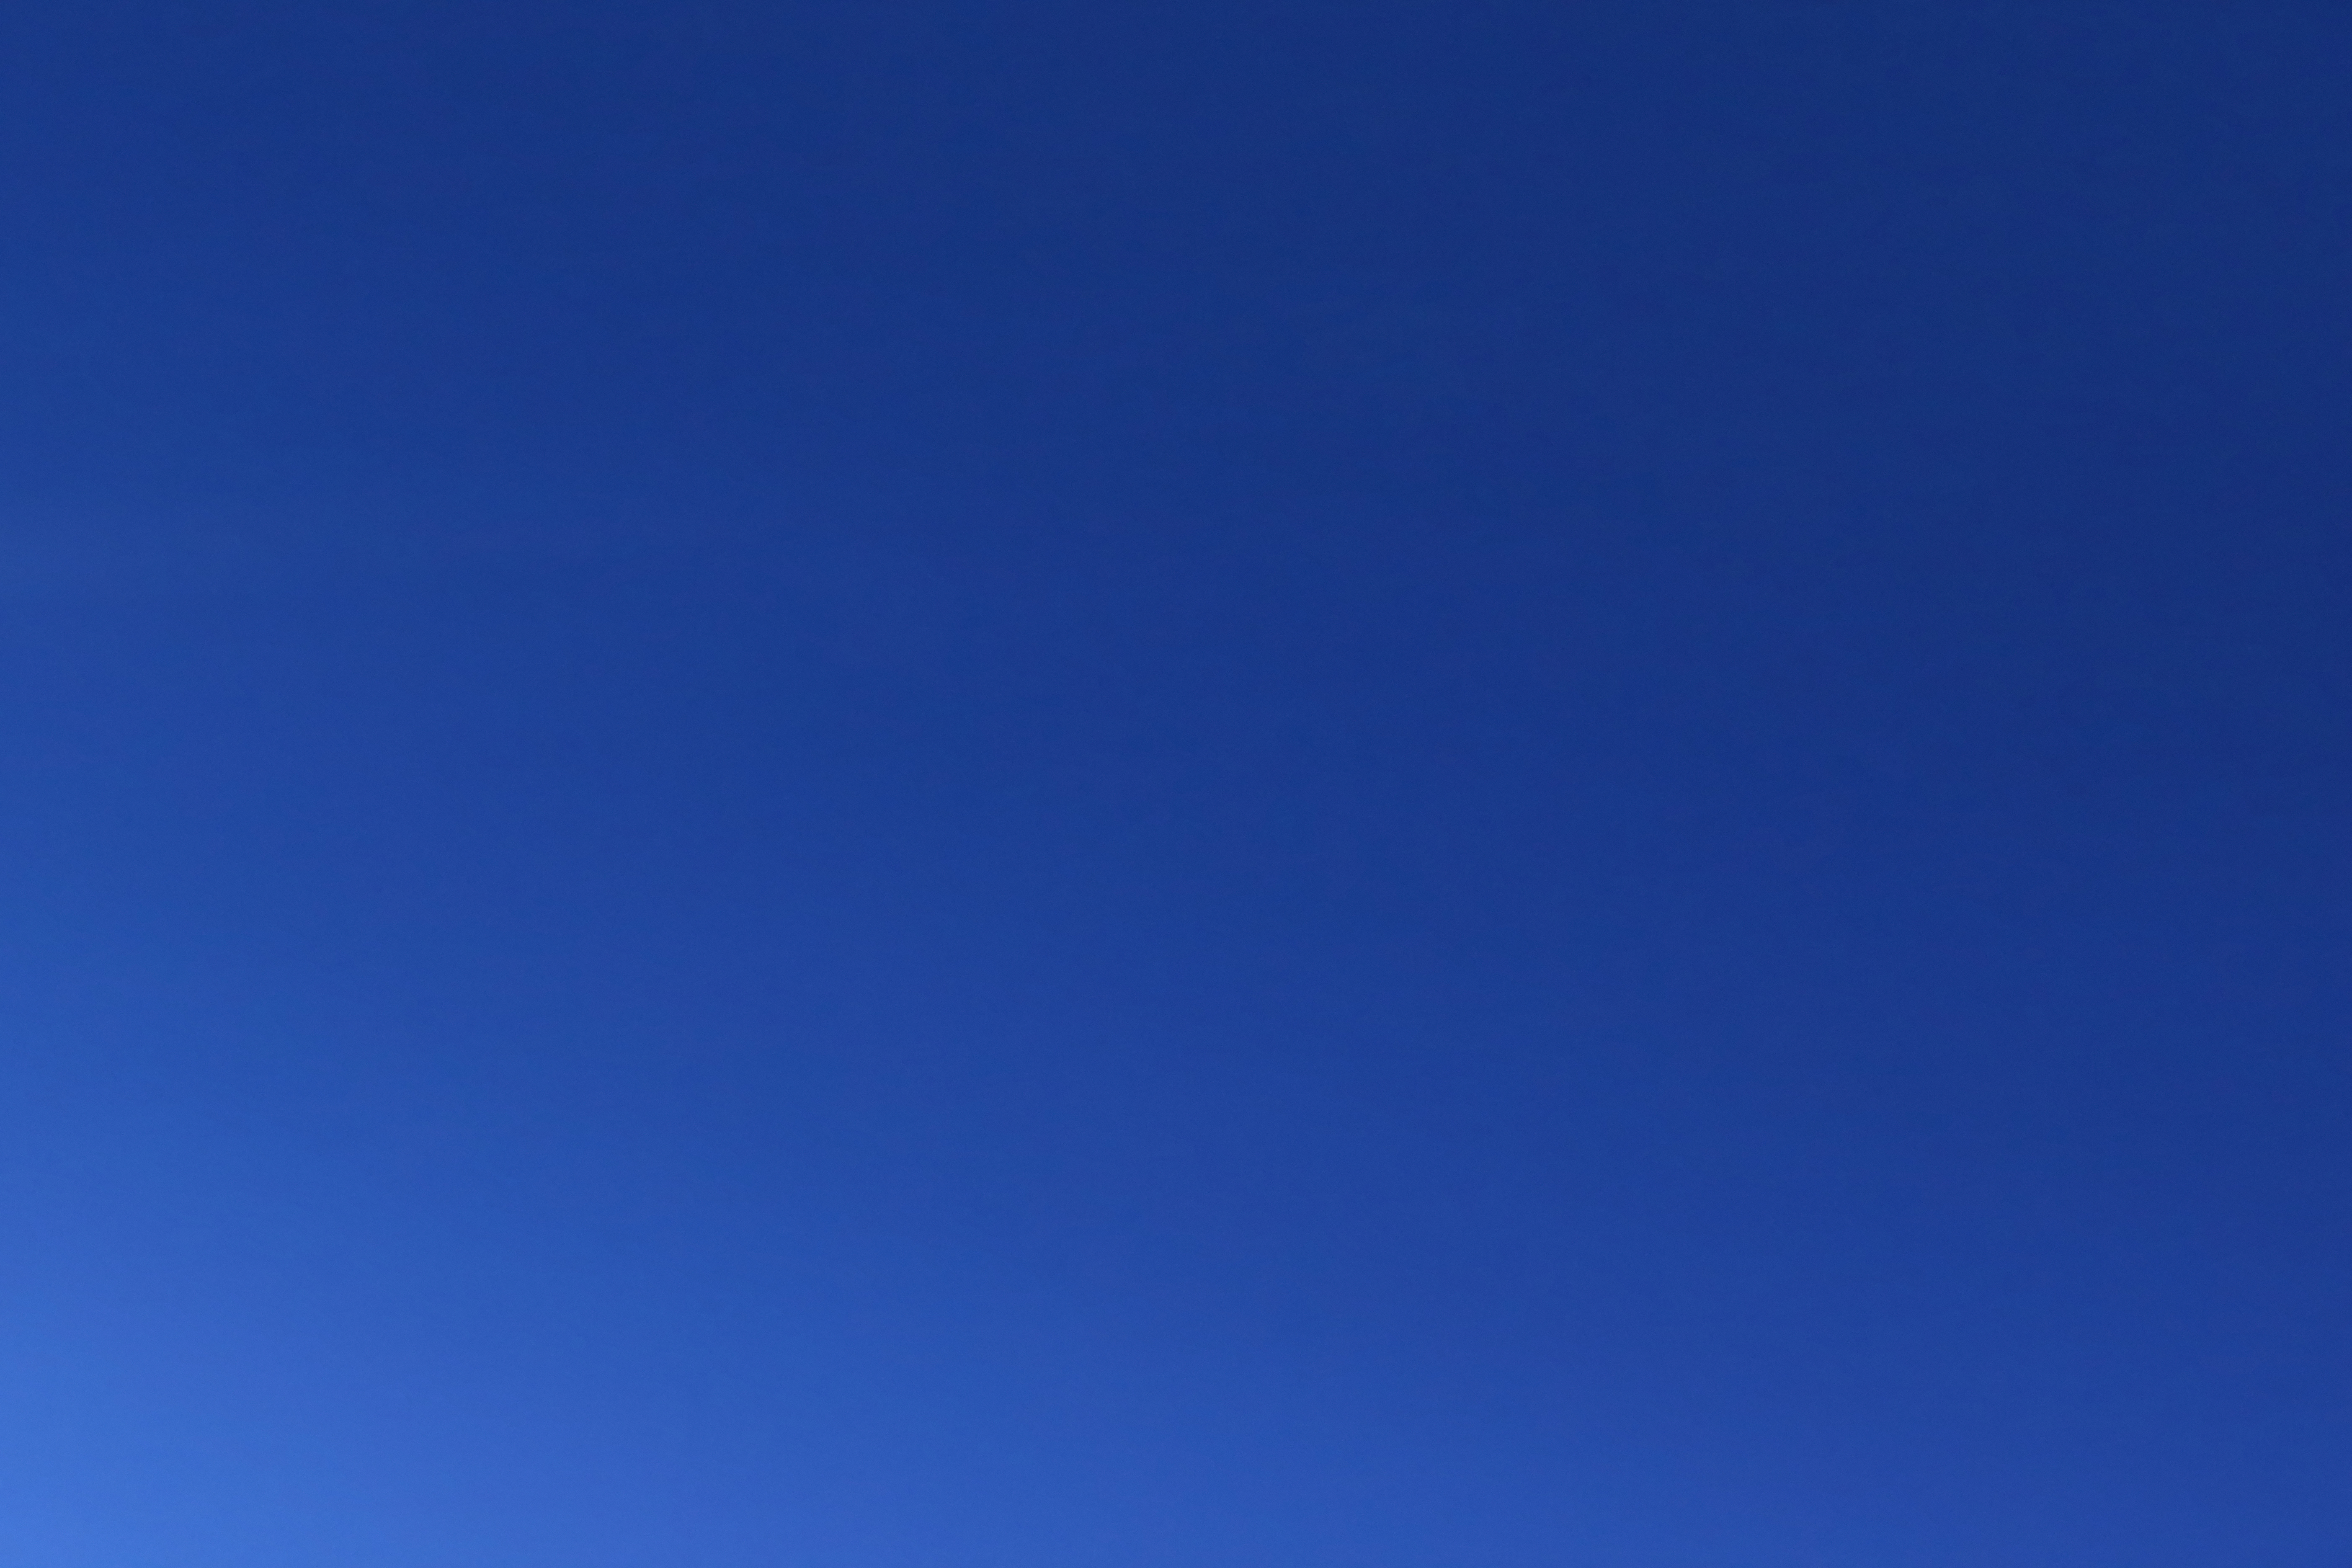 Blue sky law - Wikipedia